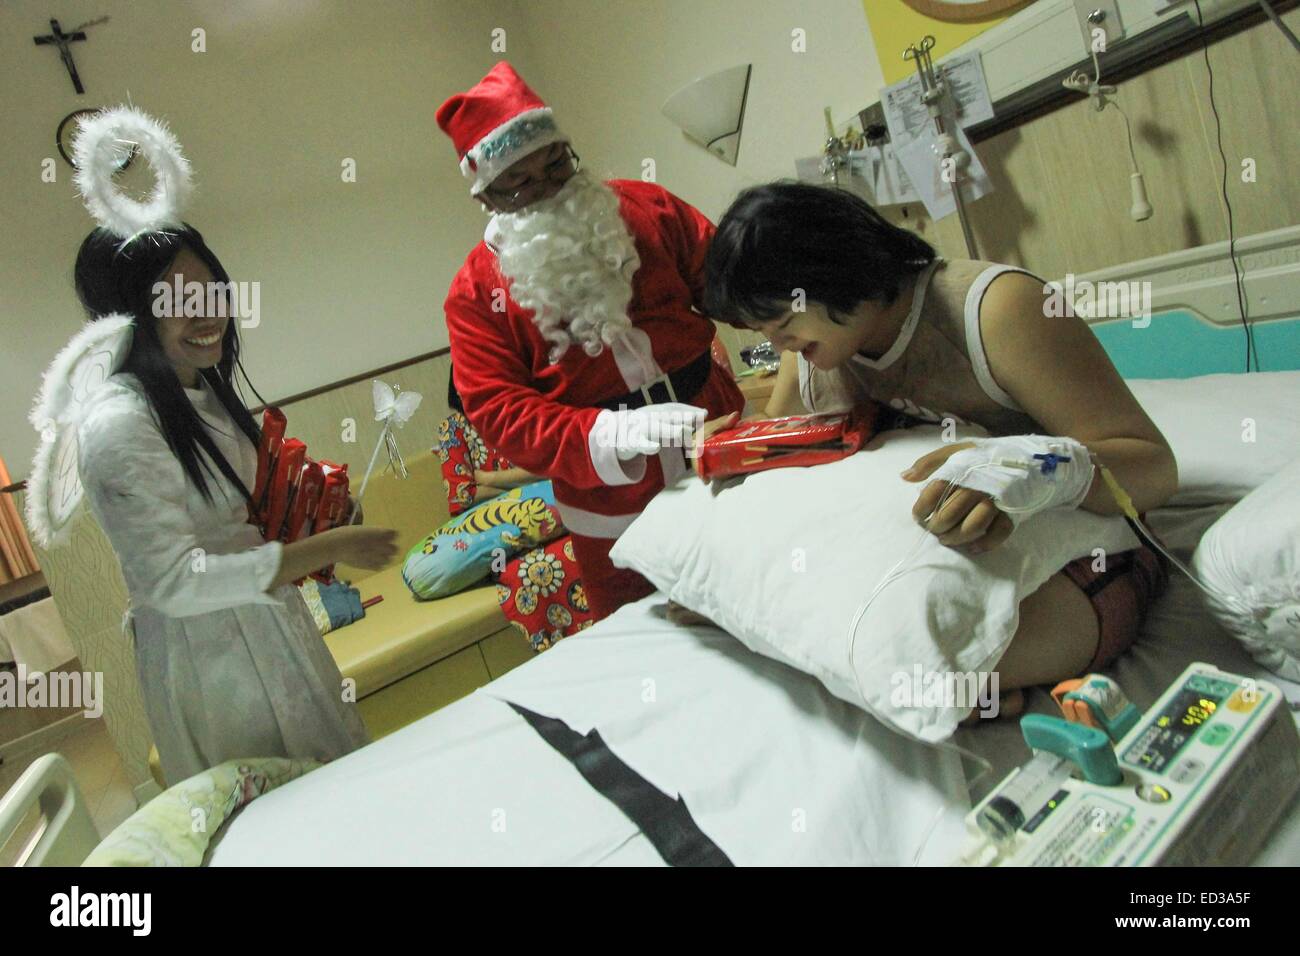 Semarang, Indonesia. 25th Dec, 2014. A man dressed as Santa Claus gives a patient presents for Christmas at St. Elisabeth hospital in Semarang, Indonesia, Dec. 25, 2014. Credit:  Dhana Kencana/Xinhua/Alamy Live News Stock Photo